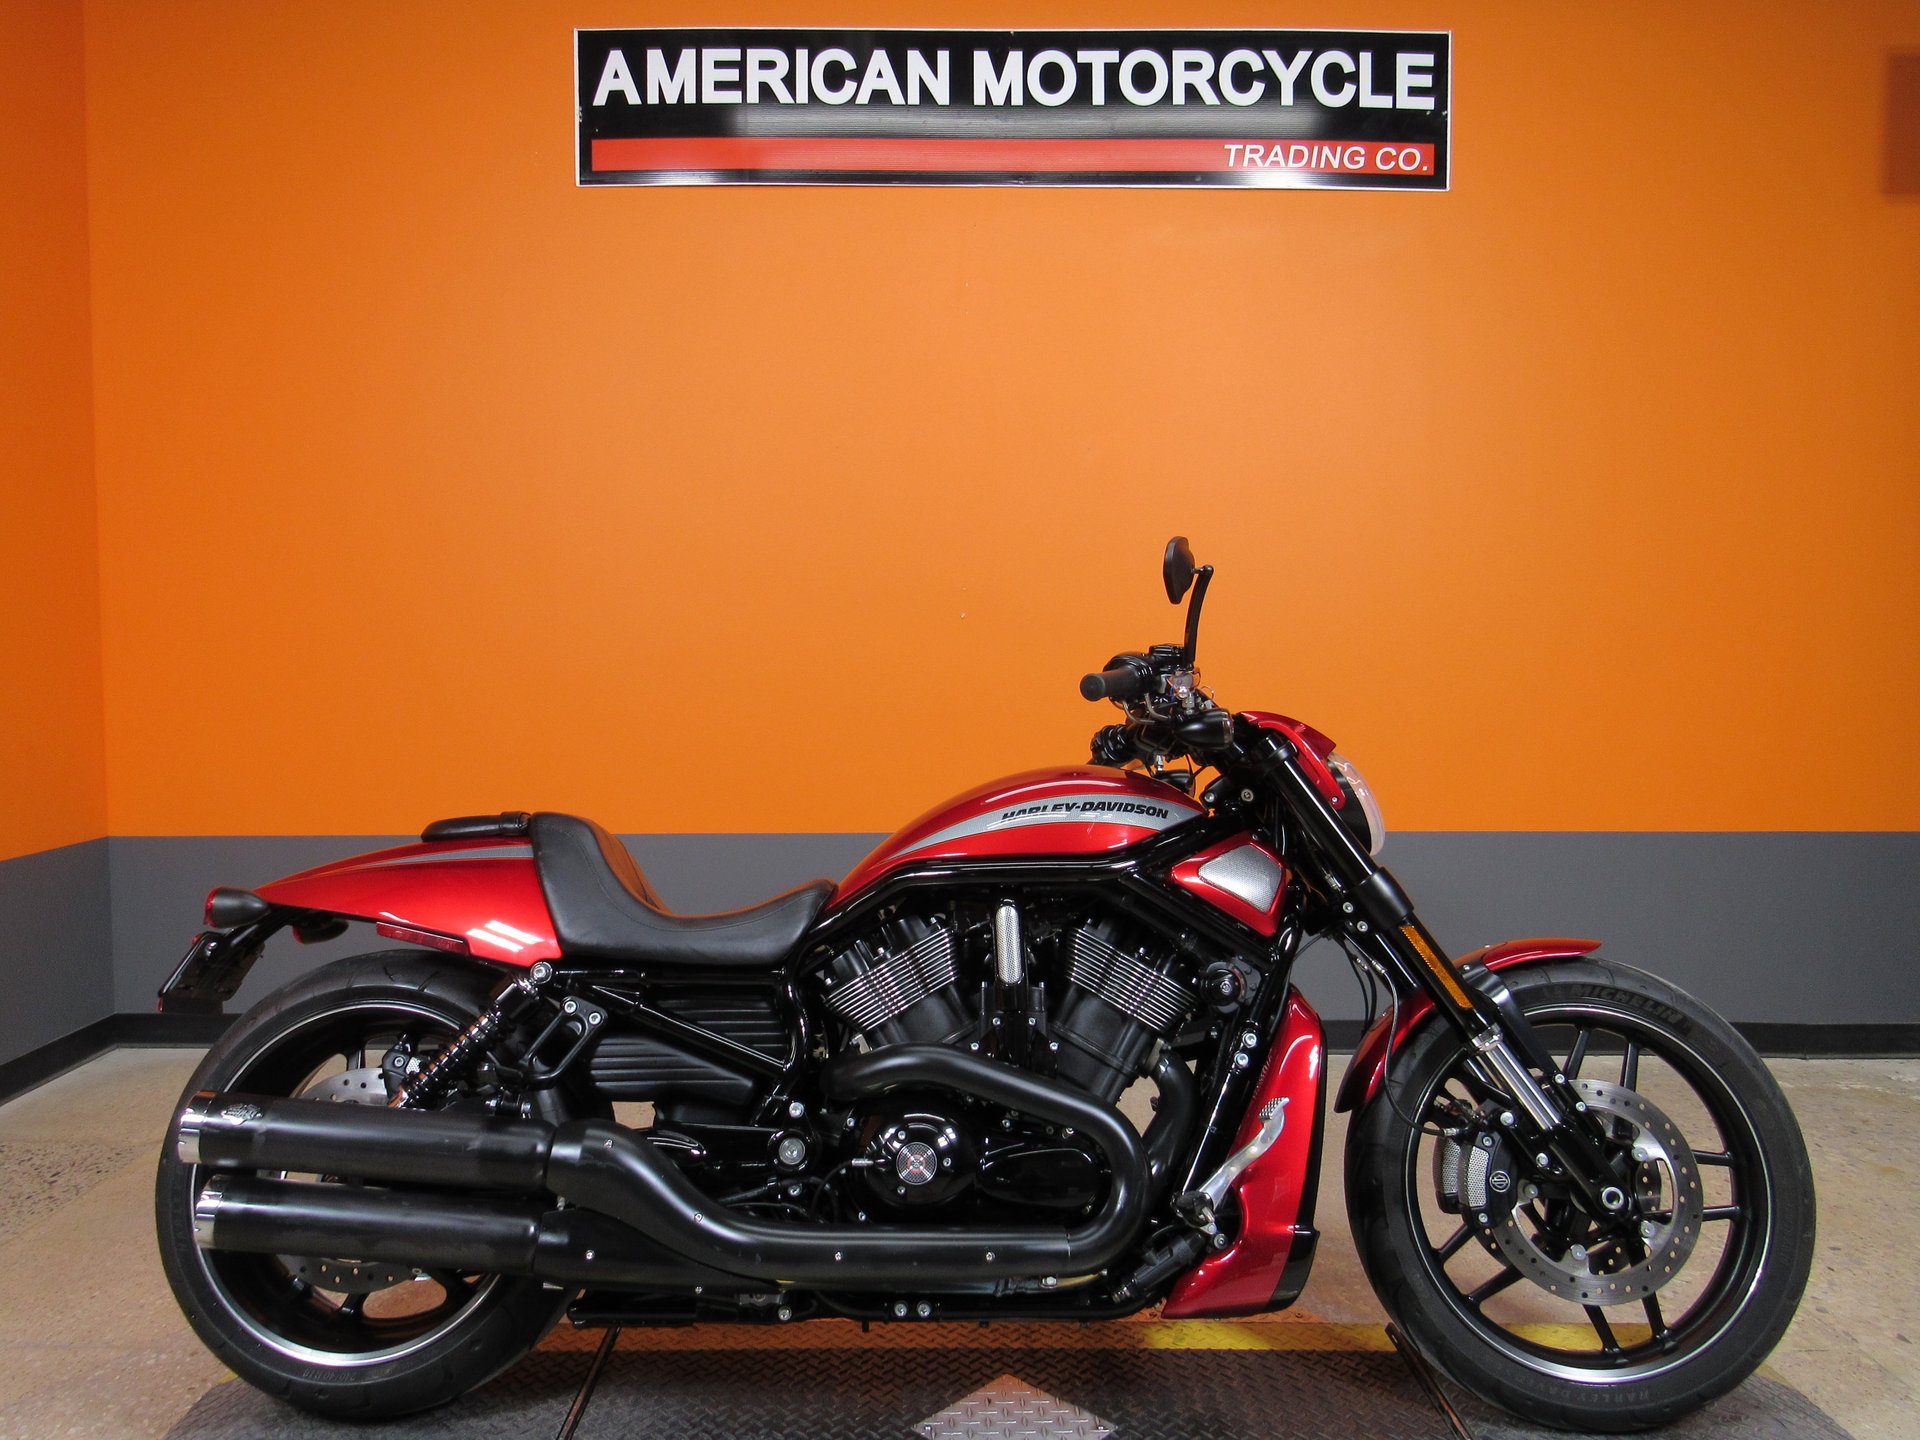 2013 Harley-Davidson V-Rod | American Motorcycle Trading Company - Used Harley  Davidson Motorcycles